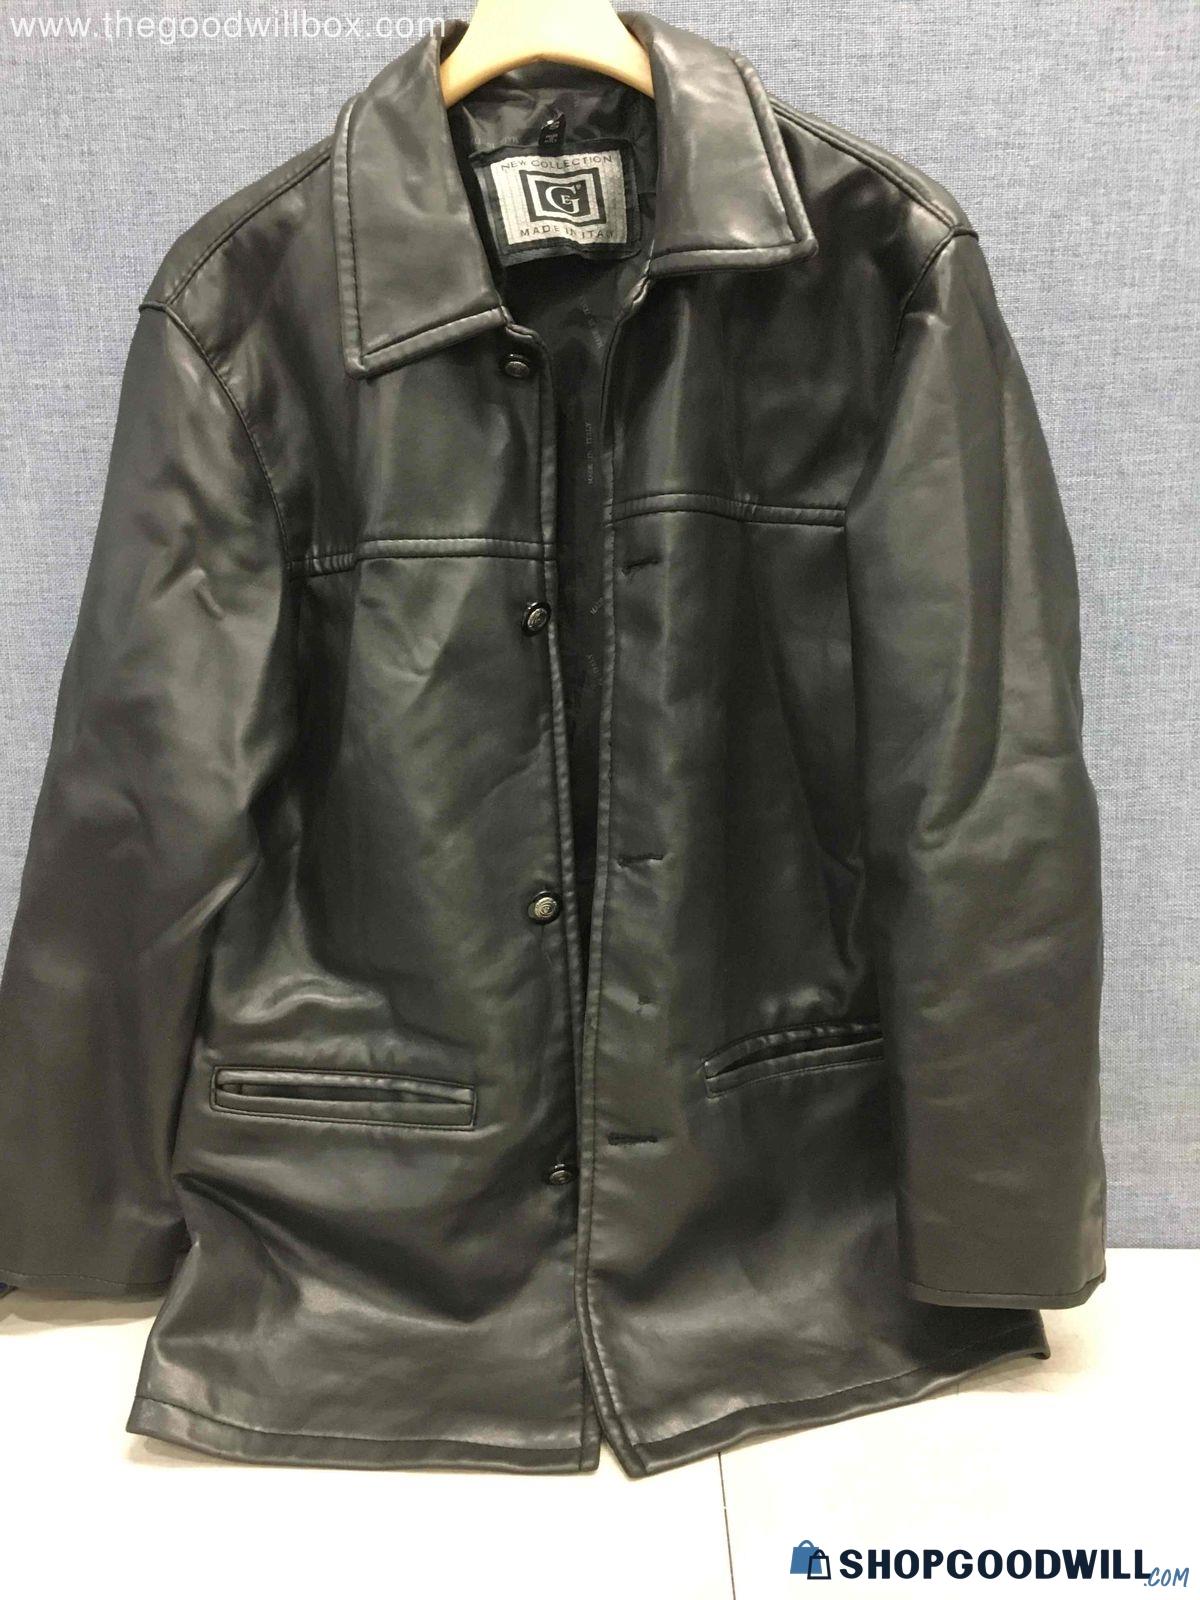 italian leather jacket - shopgoodwill.com